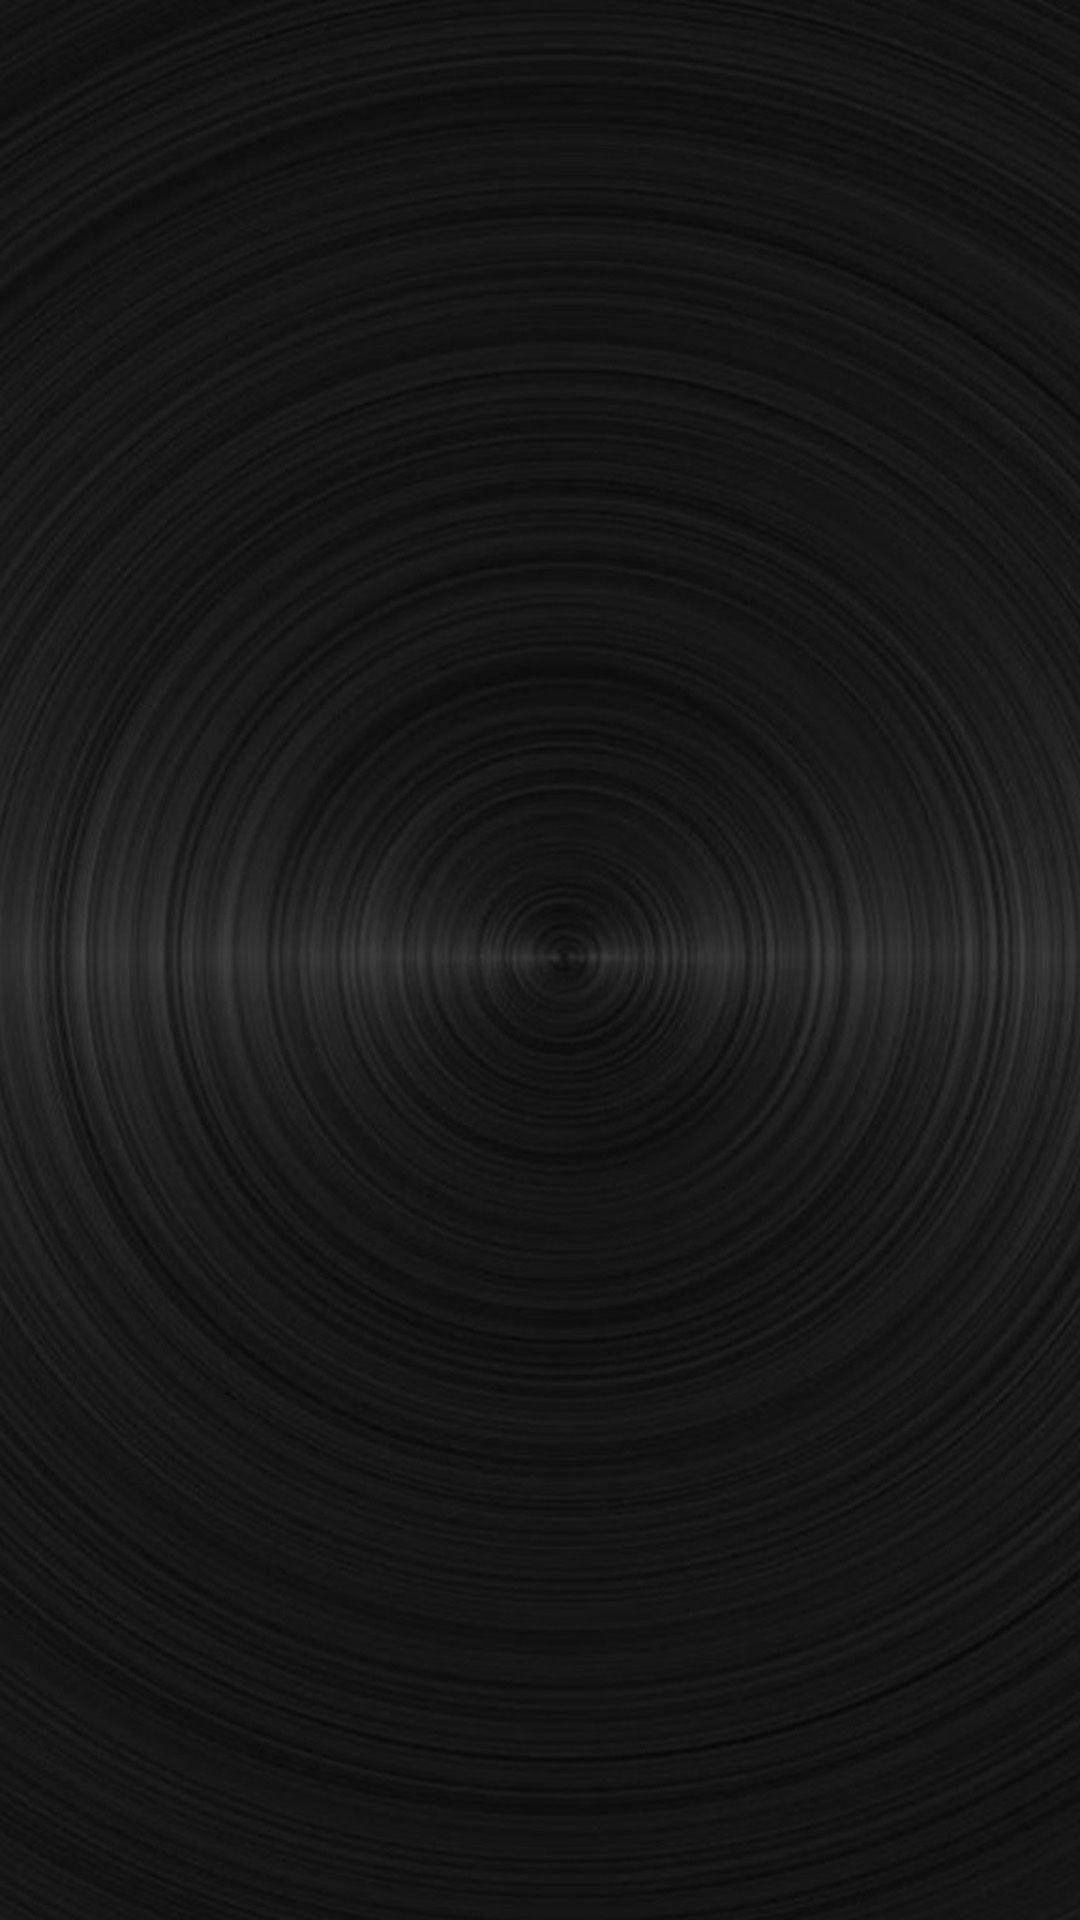 Enigmatic Solid Black 4k Textured Vinyl Background